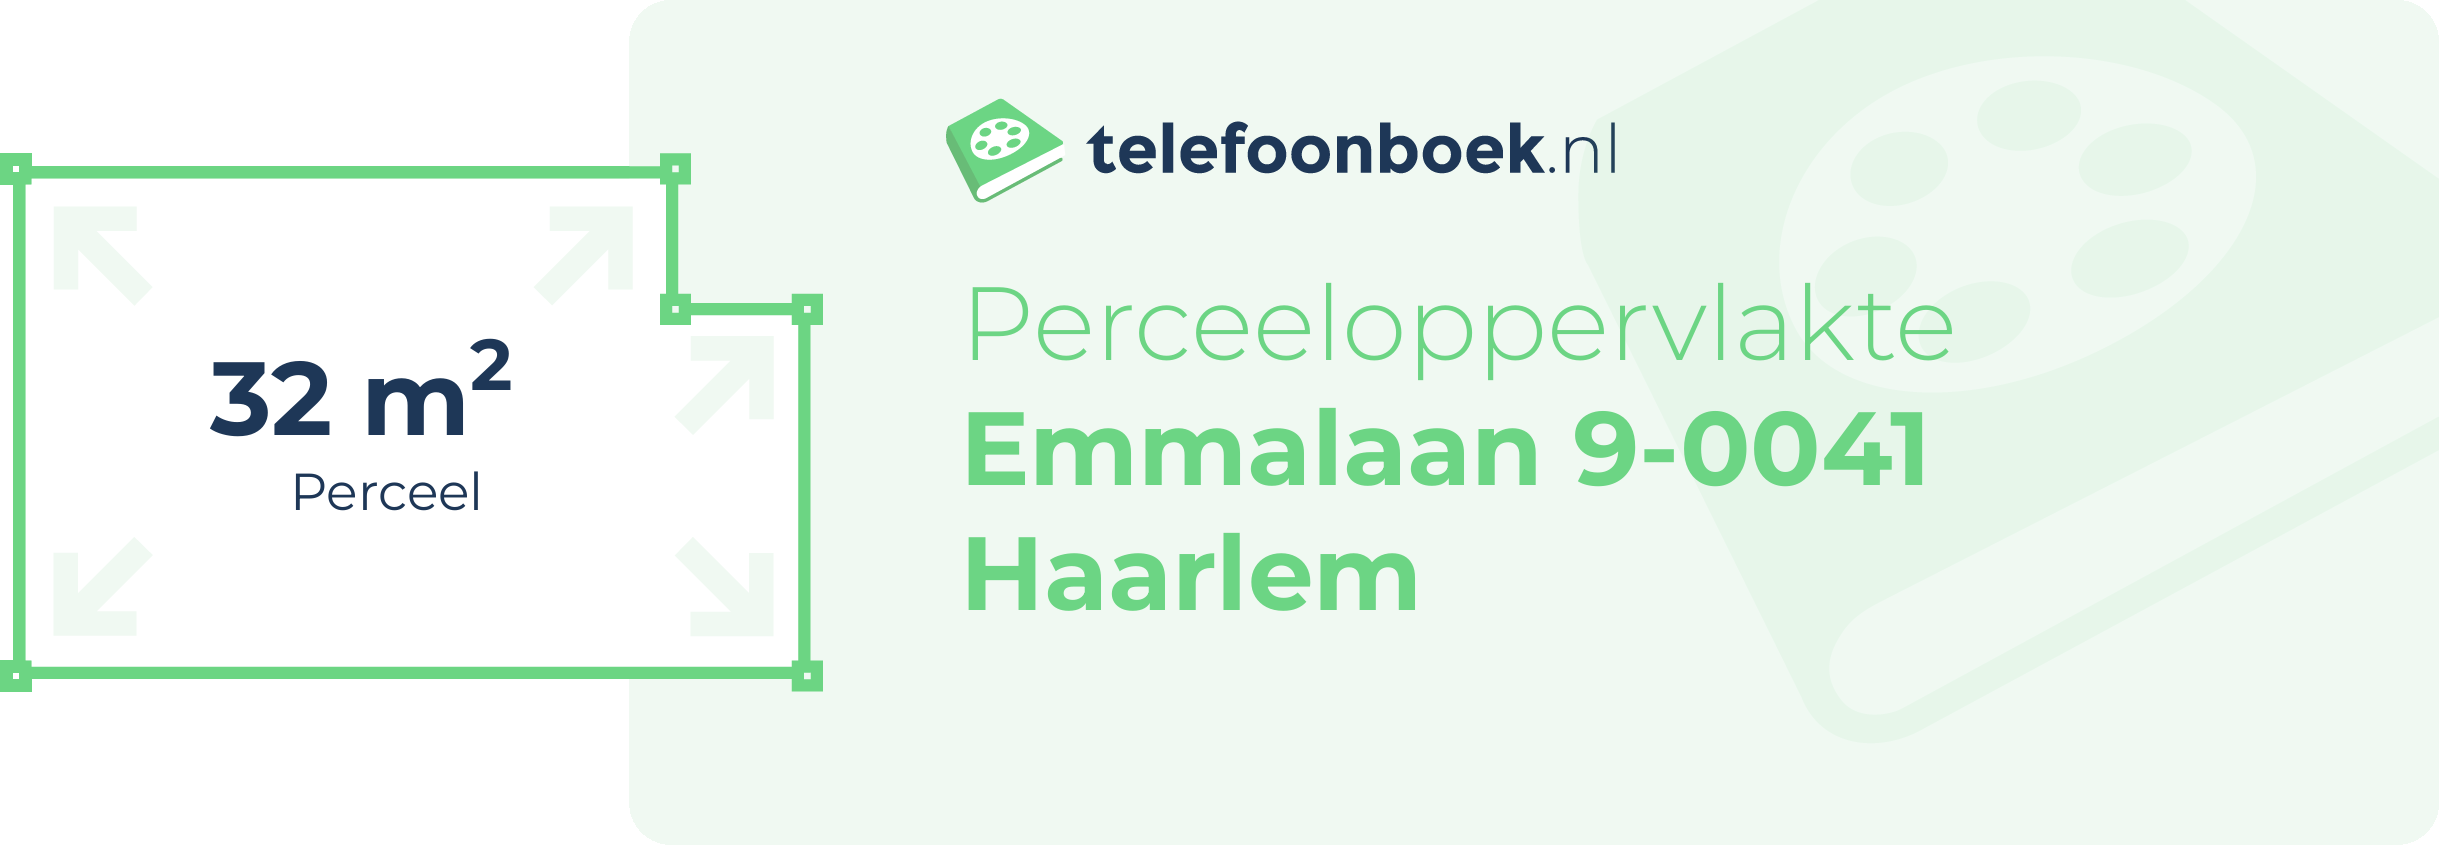 Perceeloppervlakte Emmalaan 9-0041 Haarlem